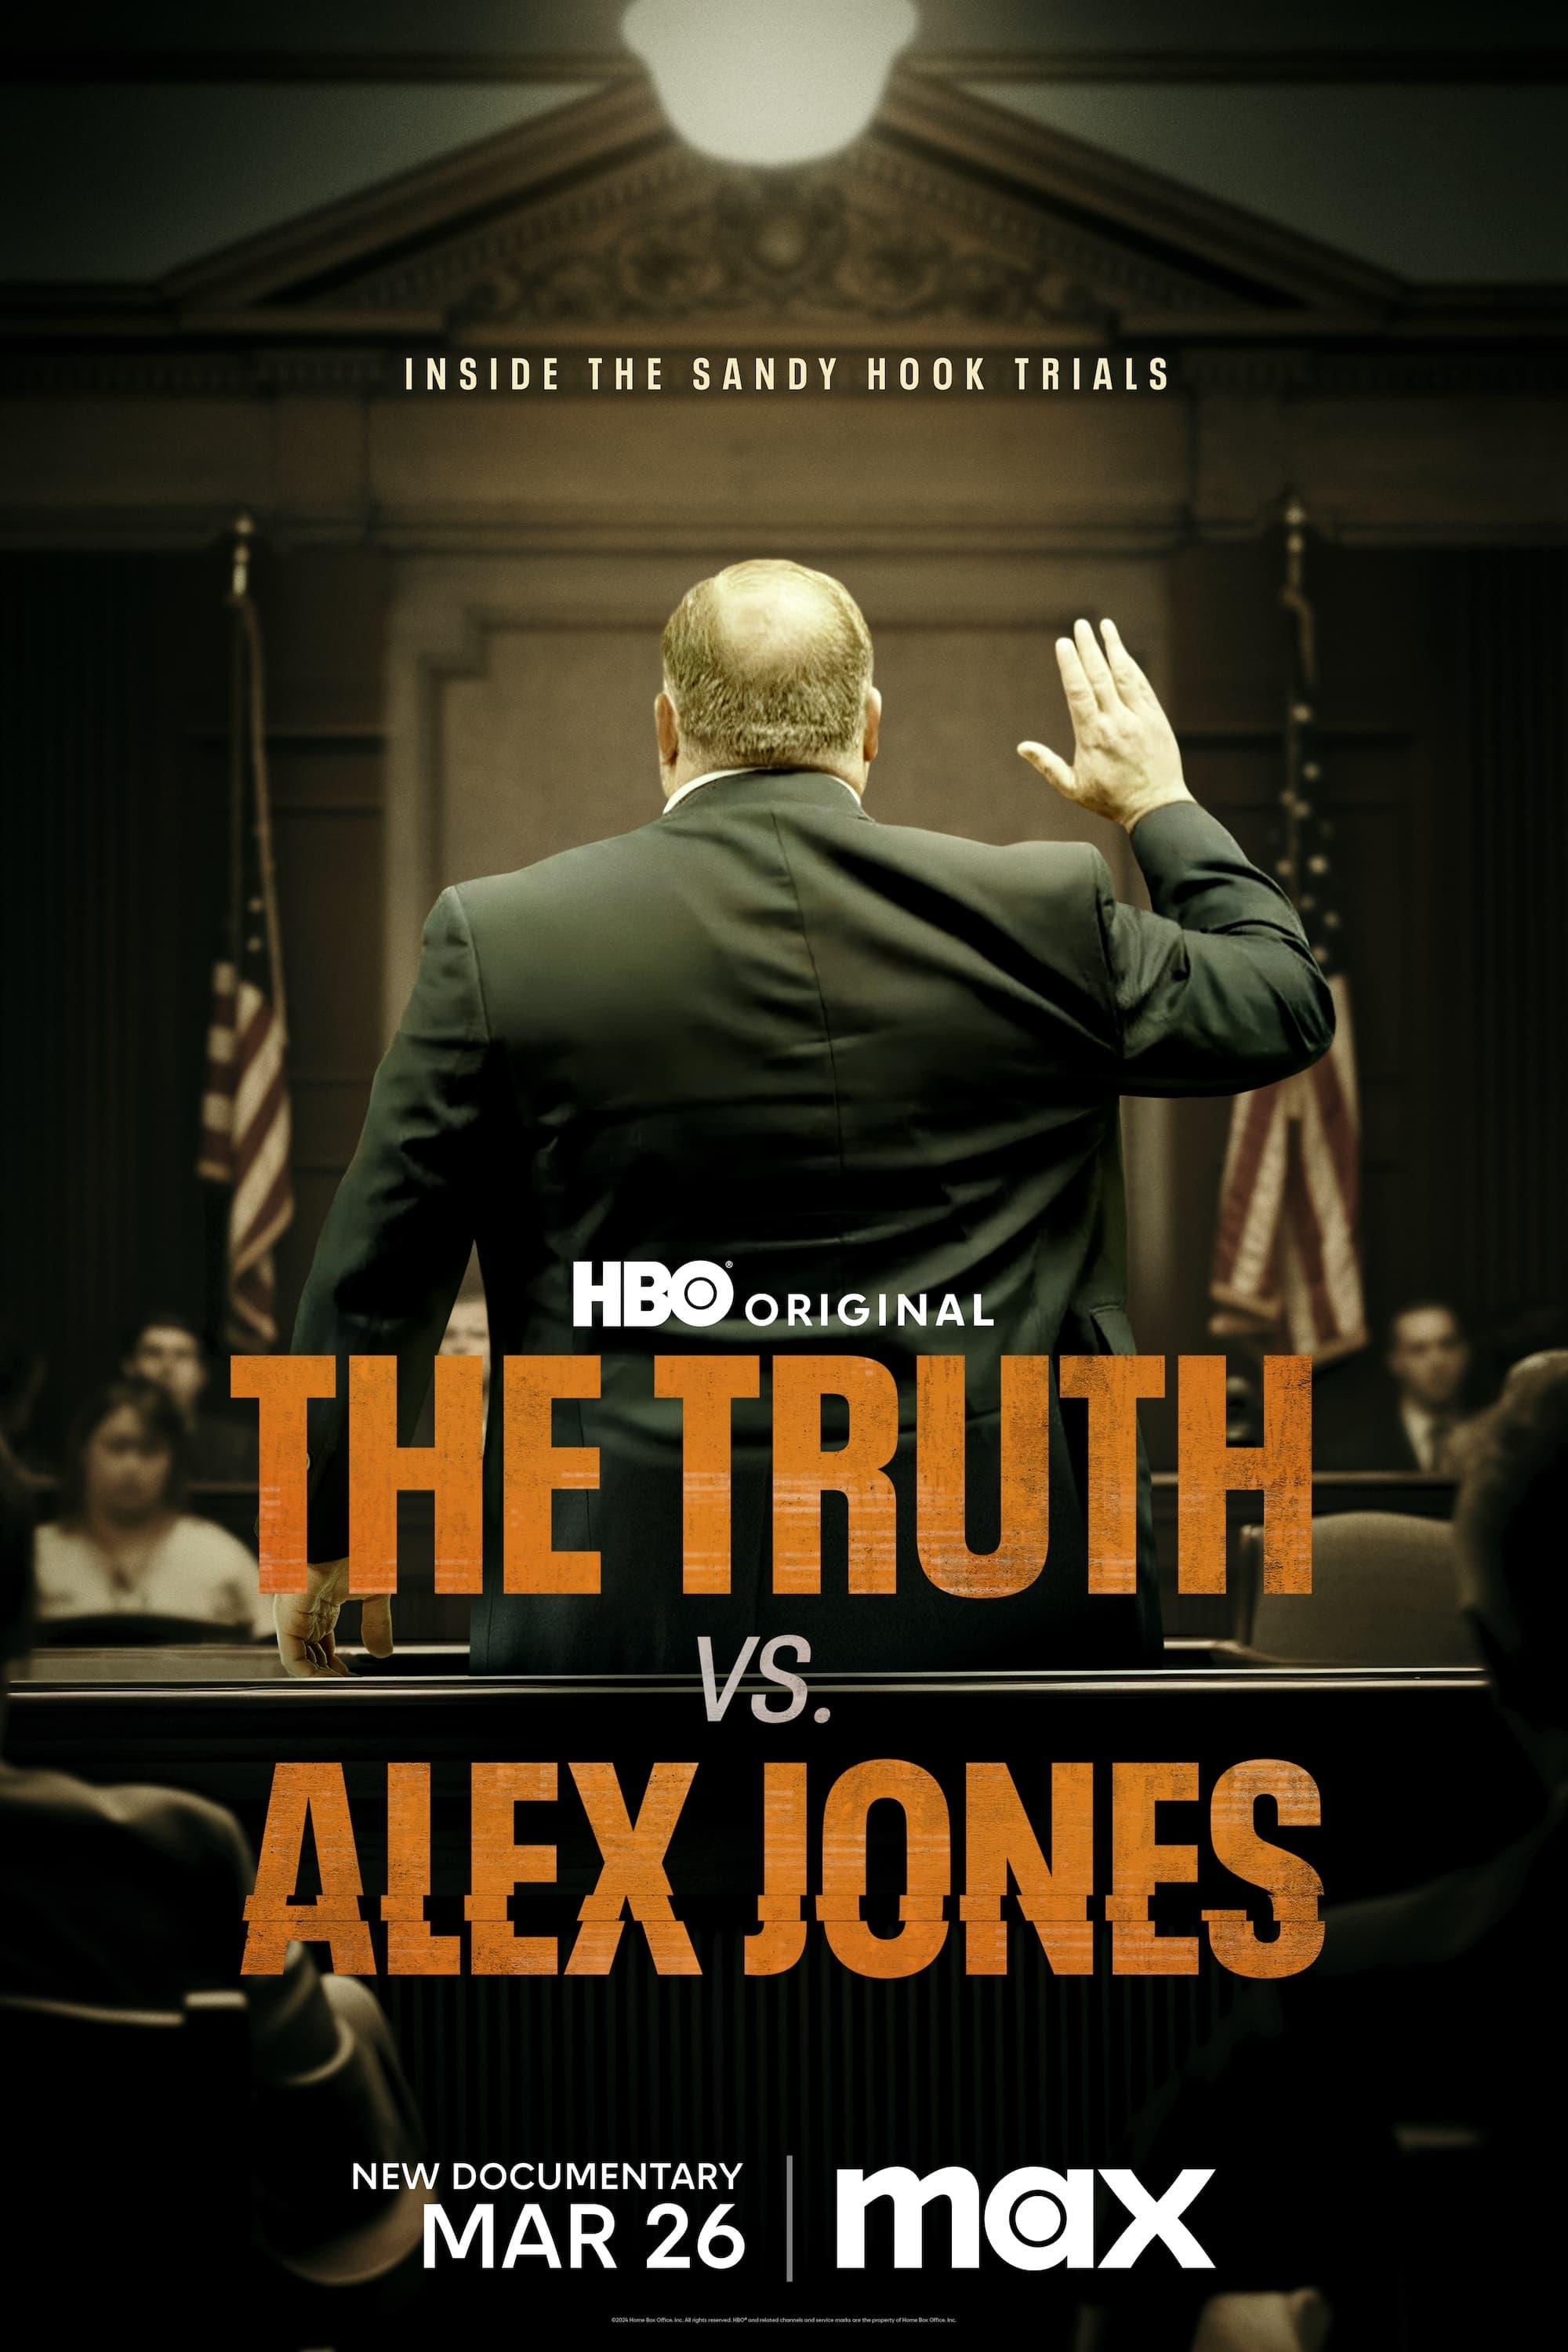 The Truth vs. Alex Jones poster